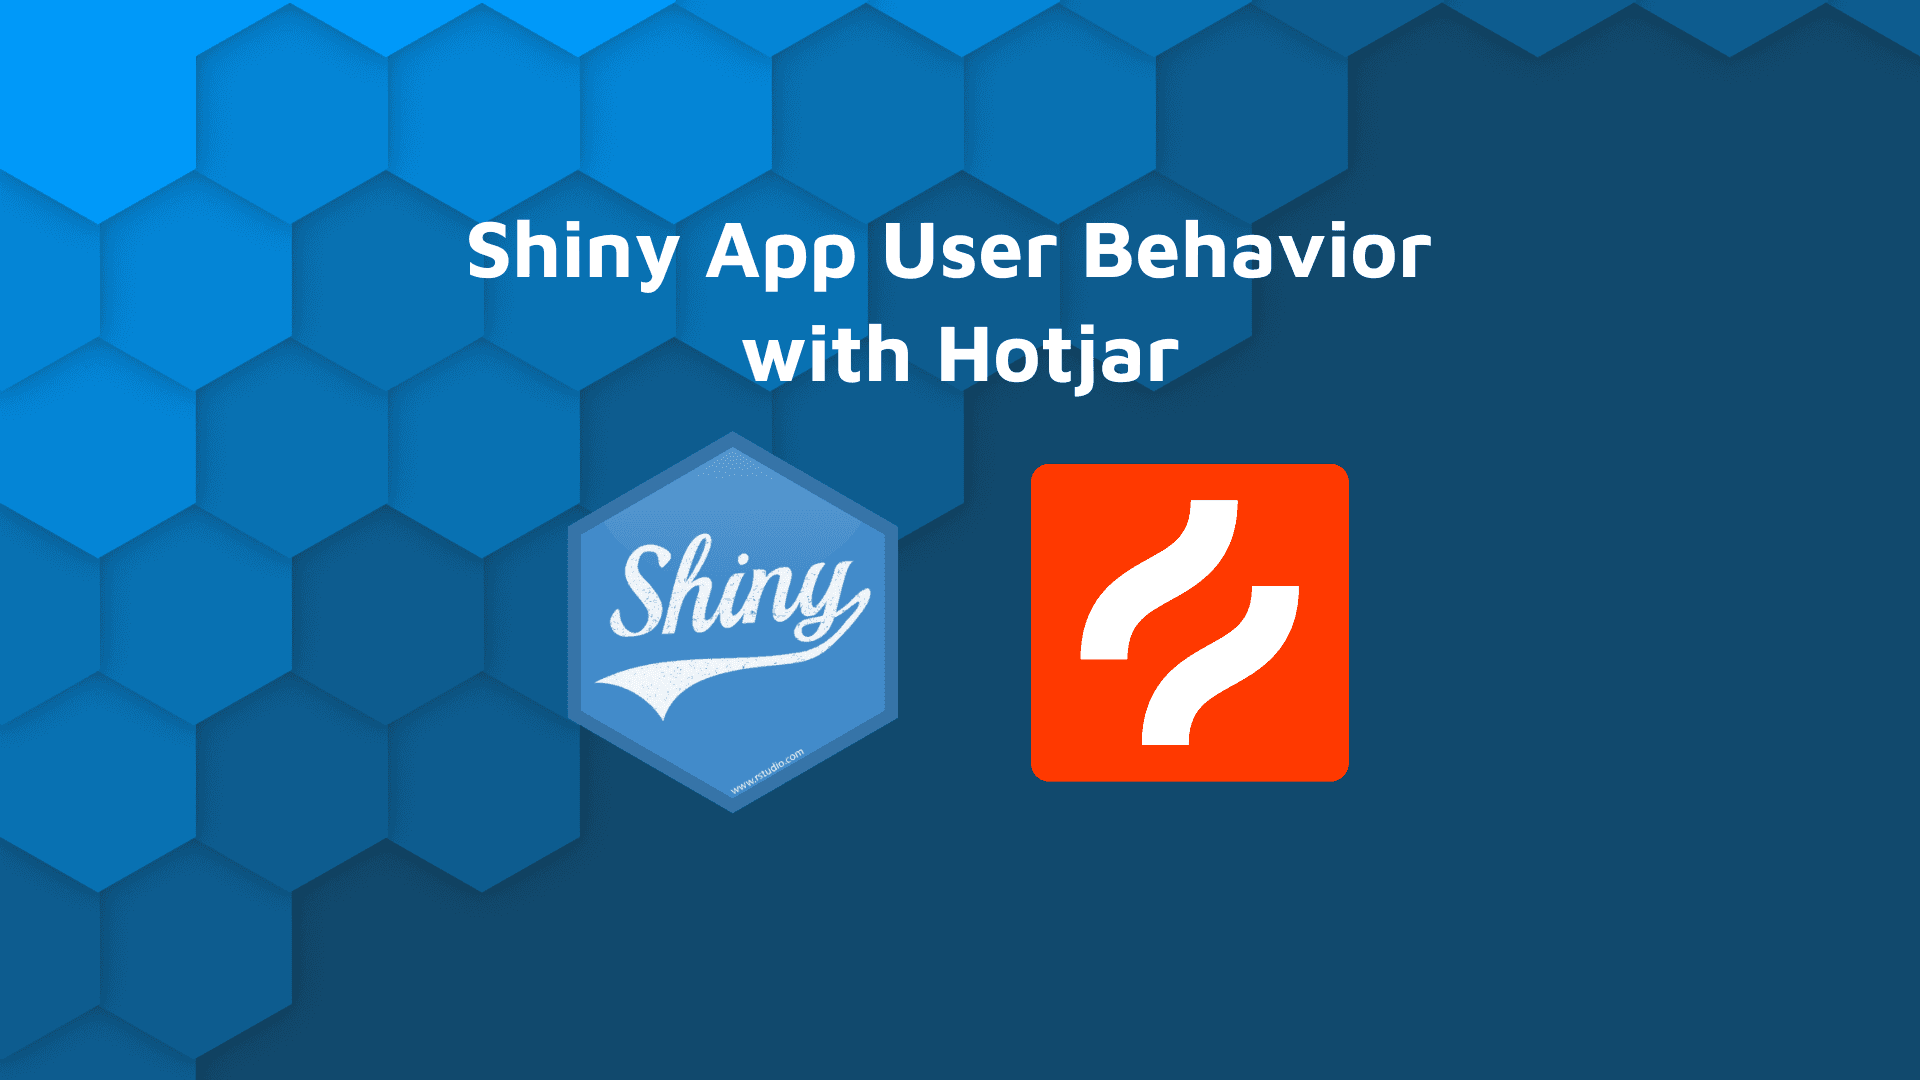 R Shiny Hotjar blog banner with white text "Shiny App User Behavior with Hotjar", Shiny open source logo, and Hotjar logo